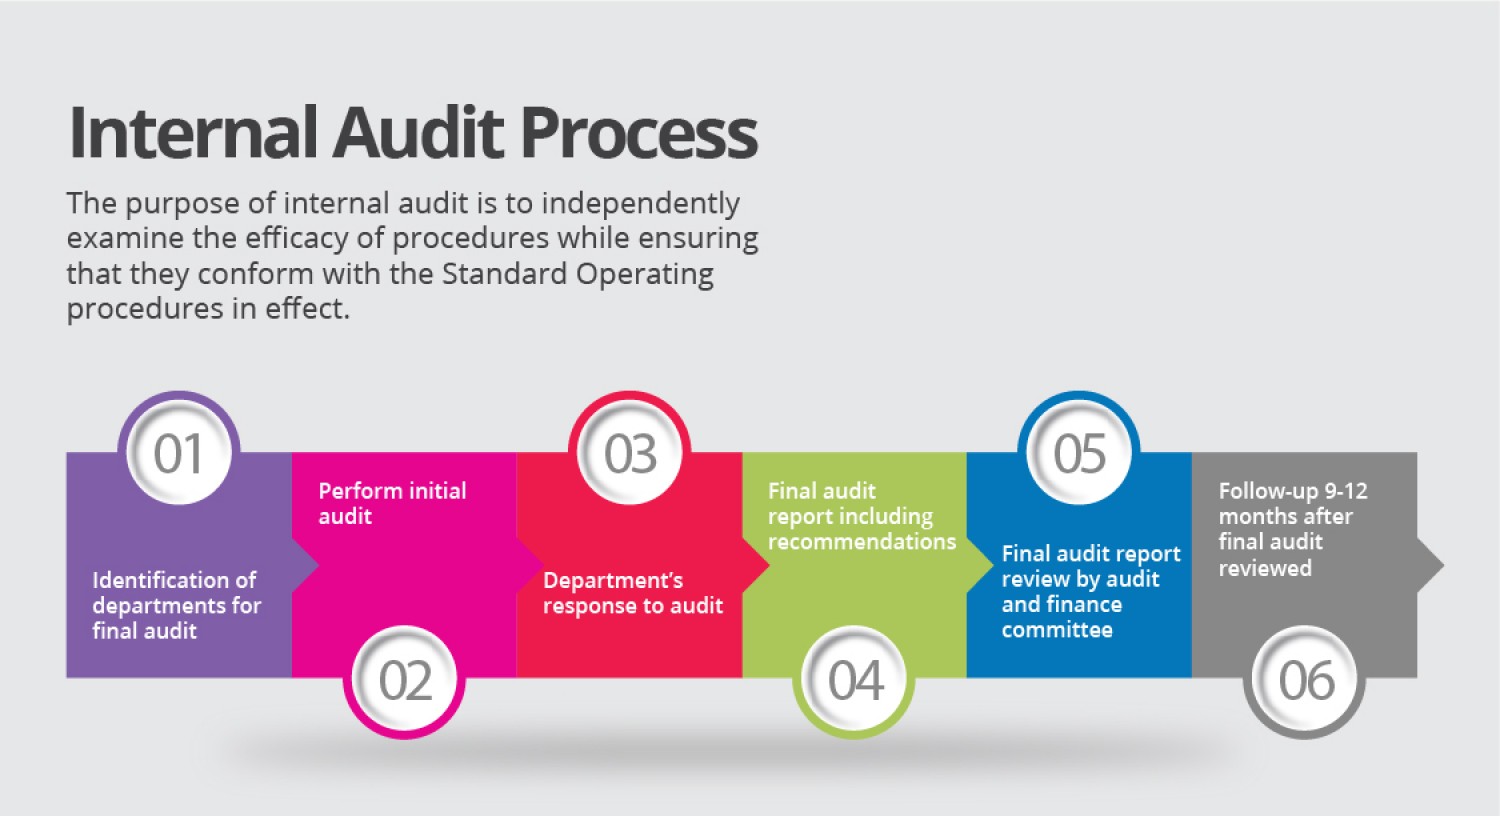 The Internal Audit
Process